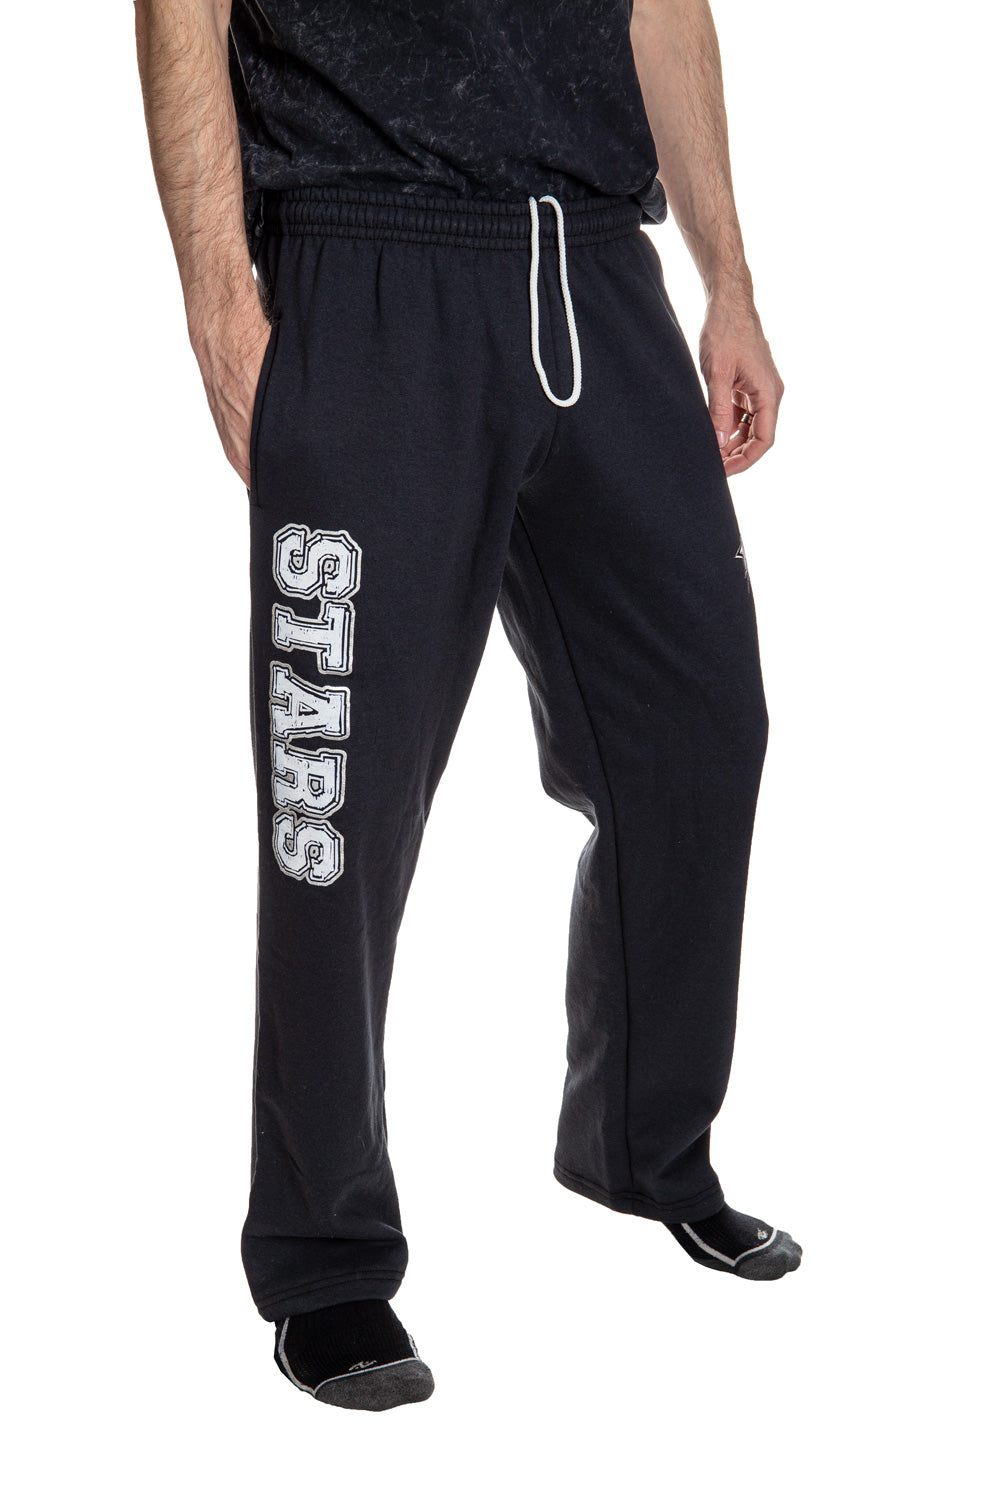 Dallas Stars Premium Fleece Sweatpants Side View of Stars Print.